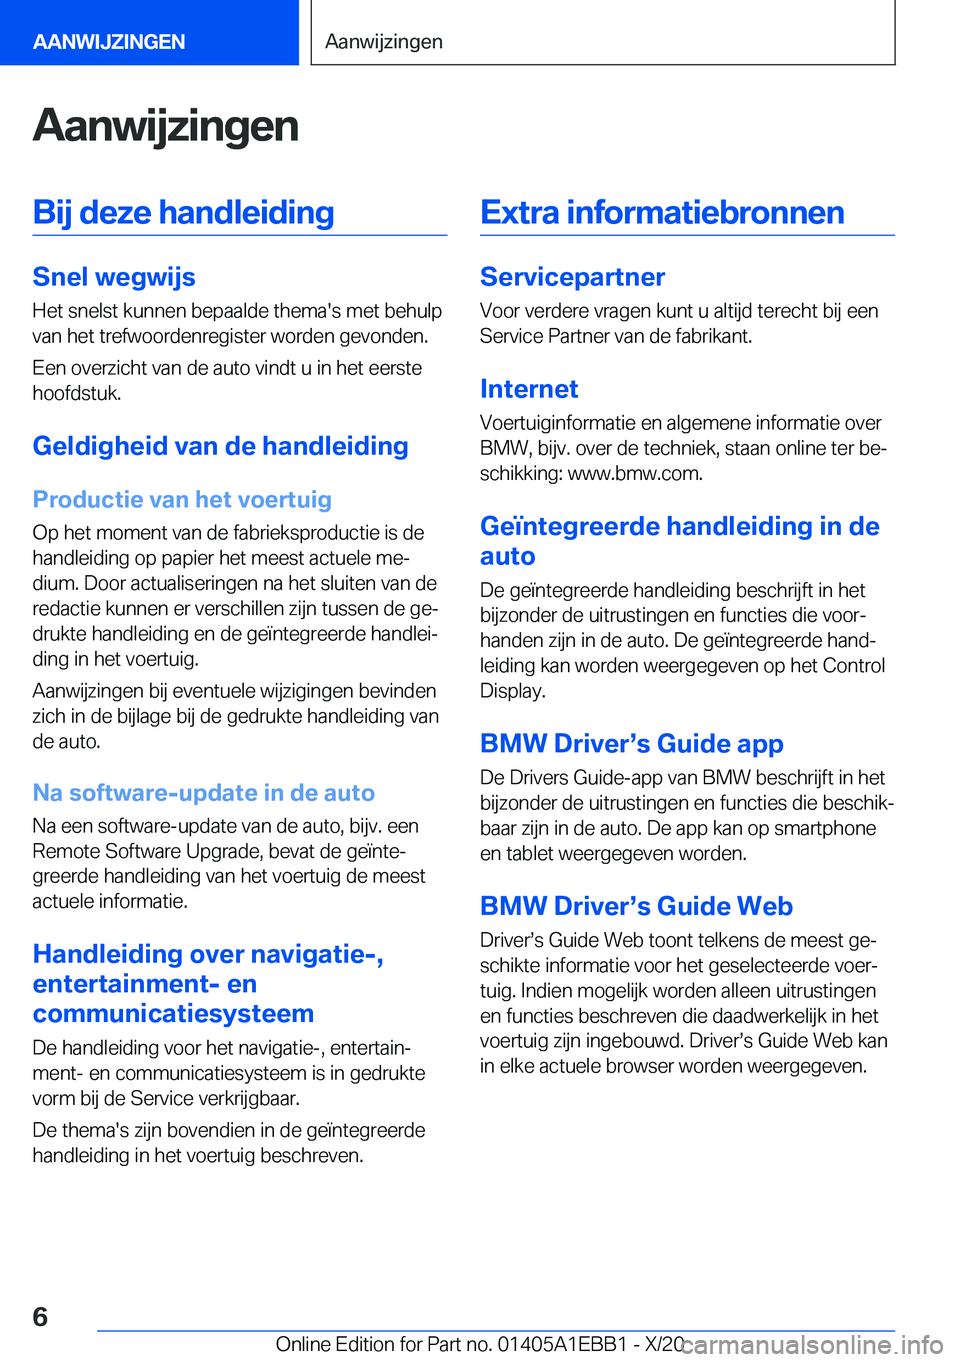 BMW 3 SERIES 2021  Instructieboekjes (in Dutch) �A�a�n�w�i�j�z�i�n�g�e�n�B�i�j��d�e�z�e��h�a�n�d�l�e�i�d�i�n�g
�S�n�e�l��w�e�g�w�i�j�s
�H�e�t��s�n�e�l�s�t��k�u�n�n�e�n��b�e�p�a�a�l�d�e��t�h�e�m�a�'�s��m�e�t��b�e�h�u�l�p
�v�a�n��h�e�t�